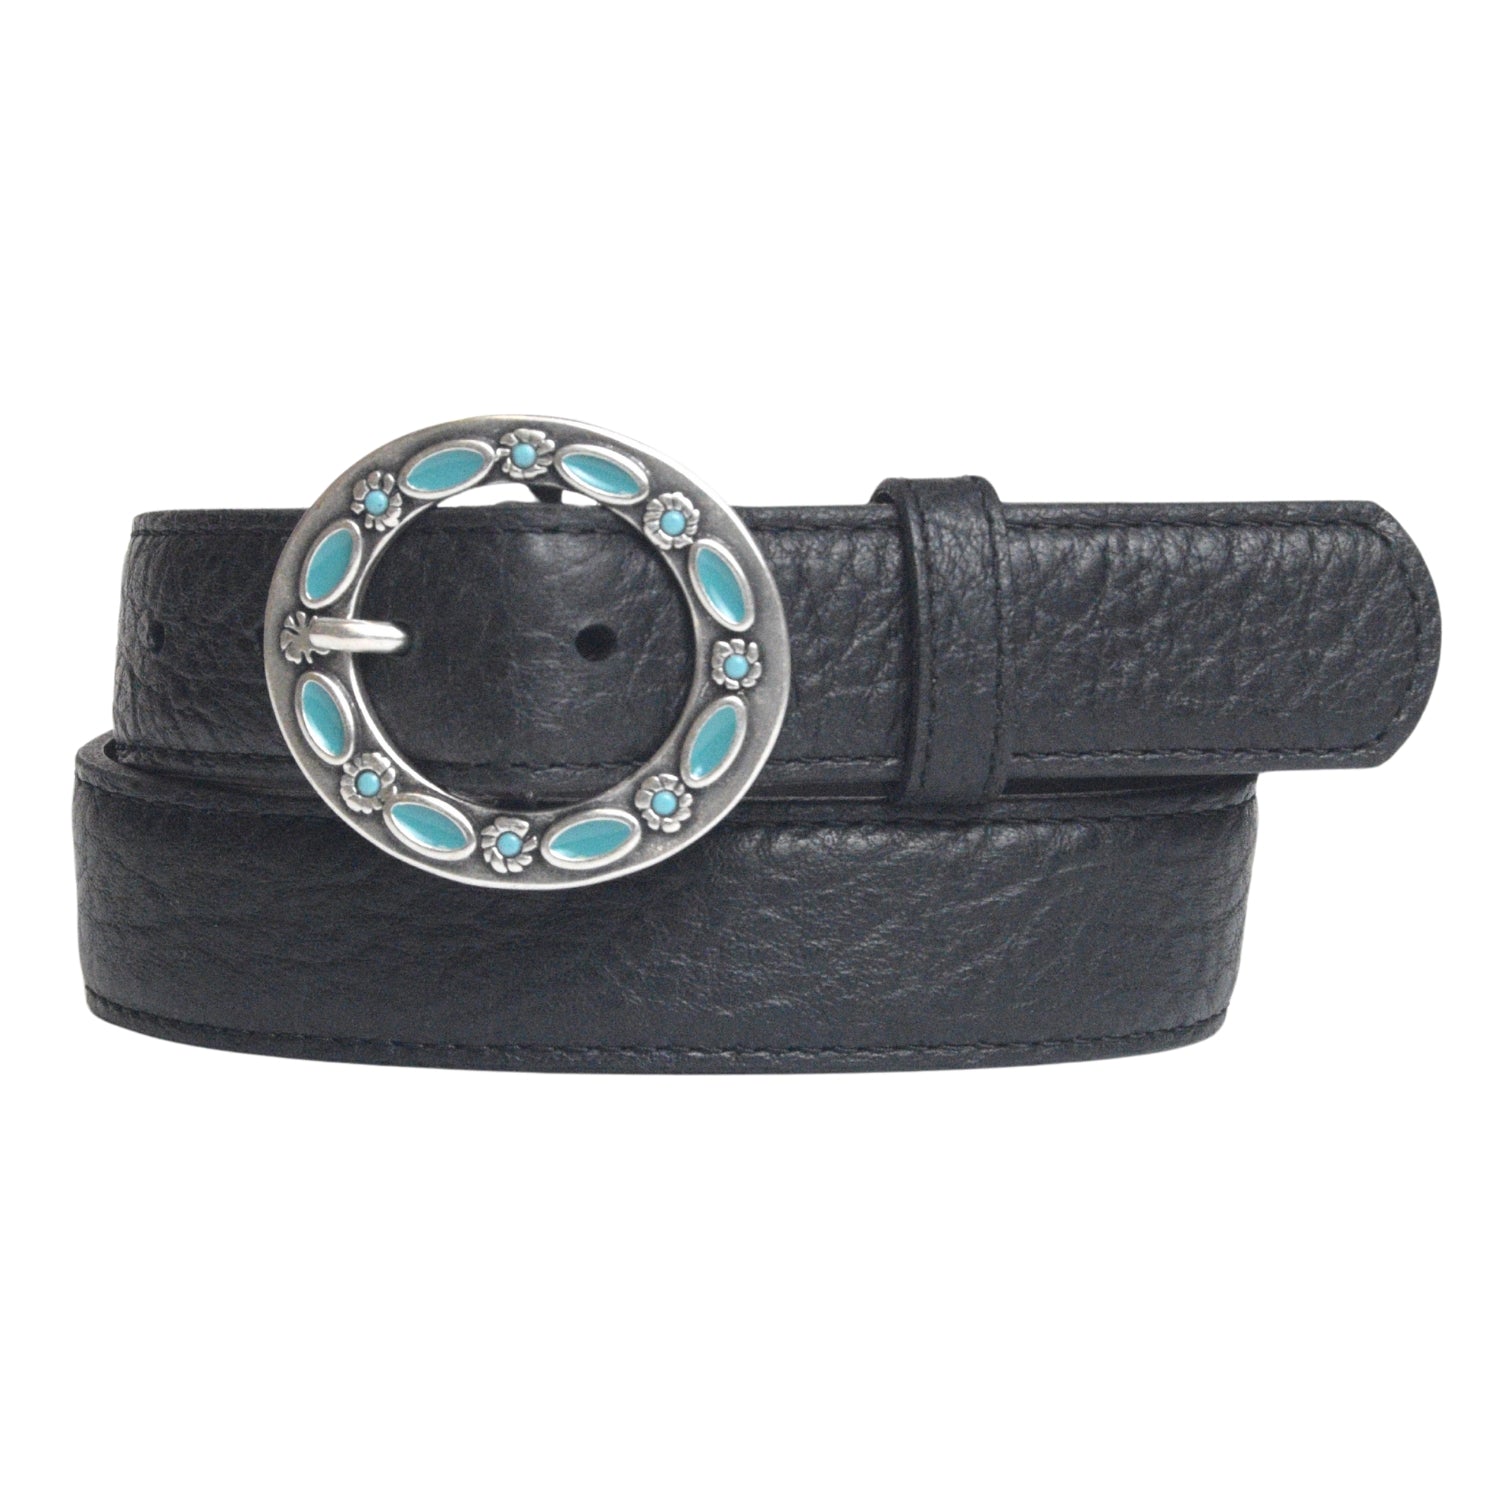 Woman's black leather belt